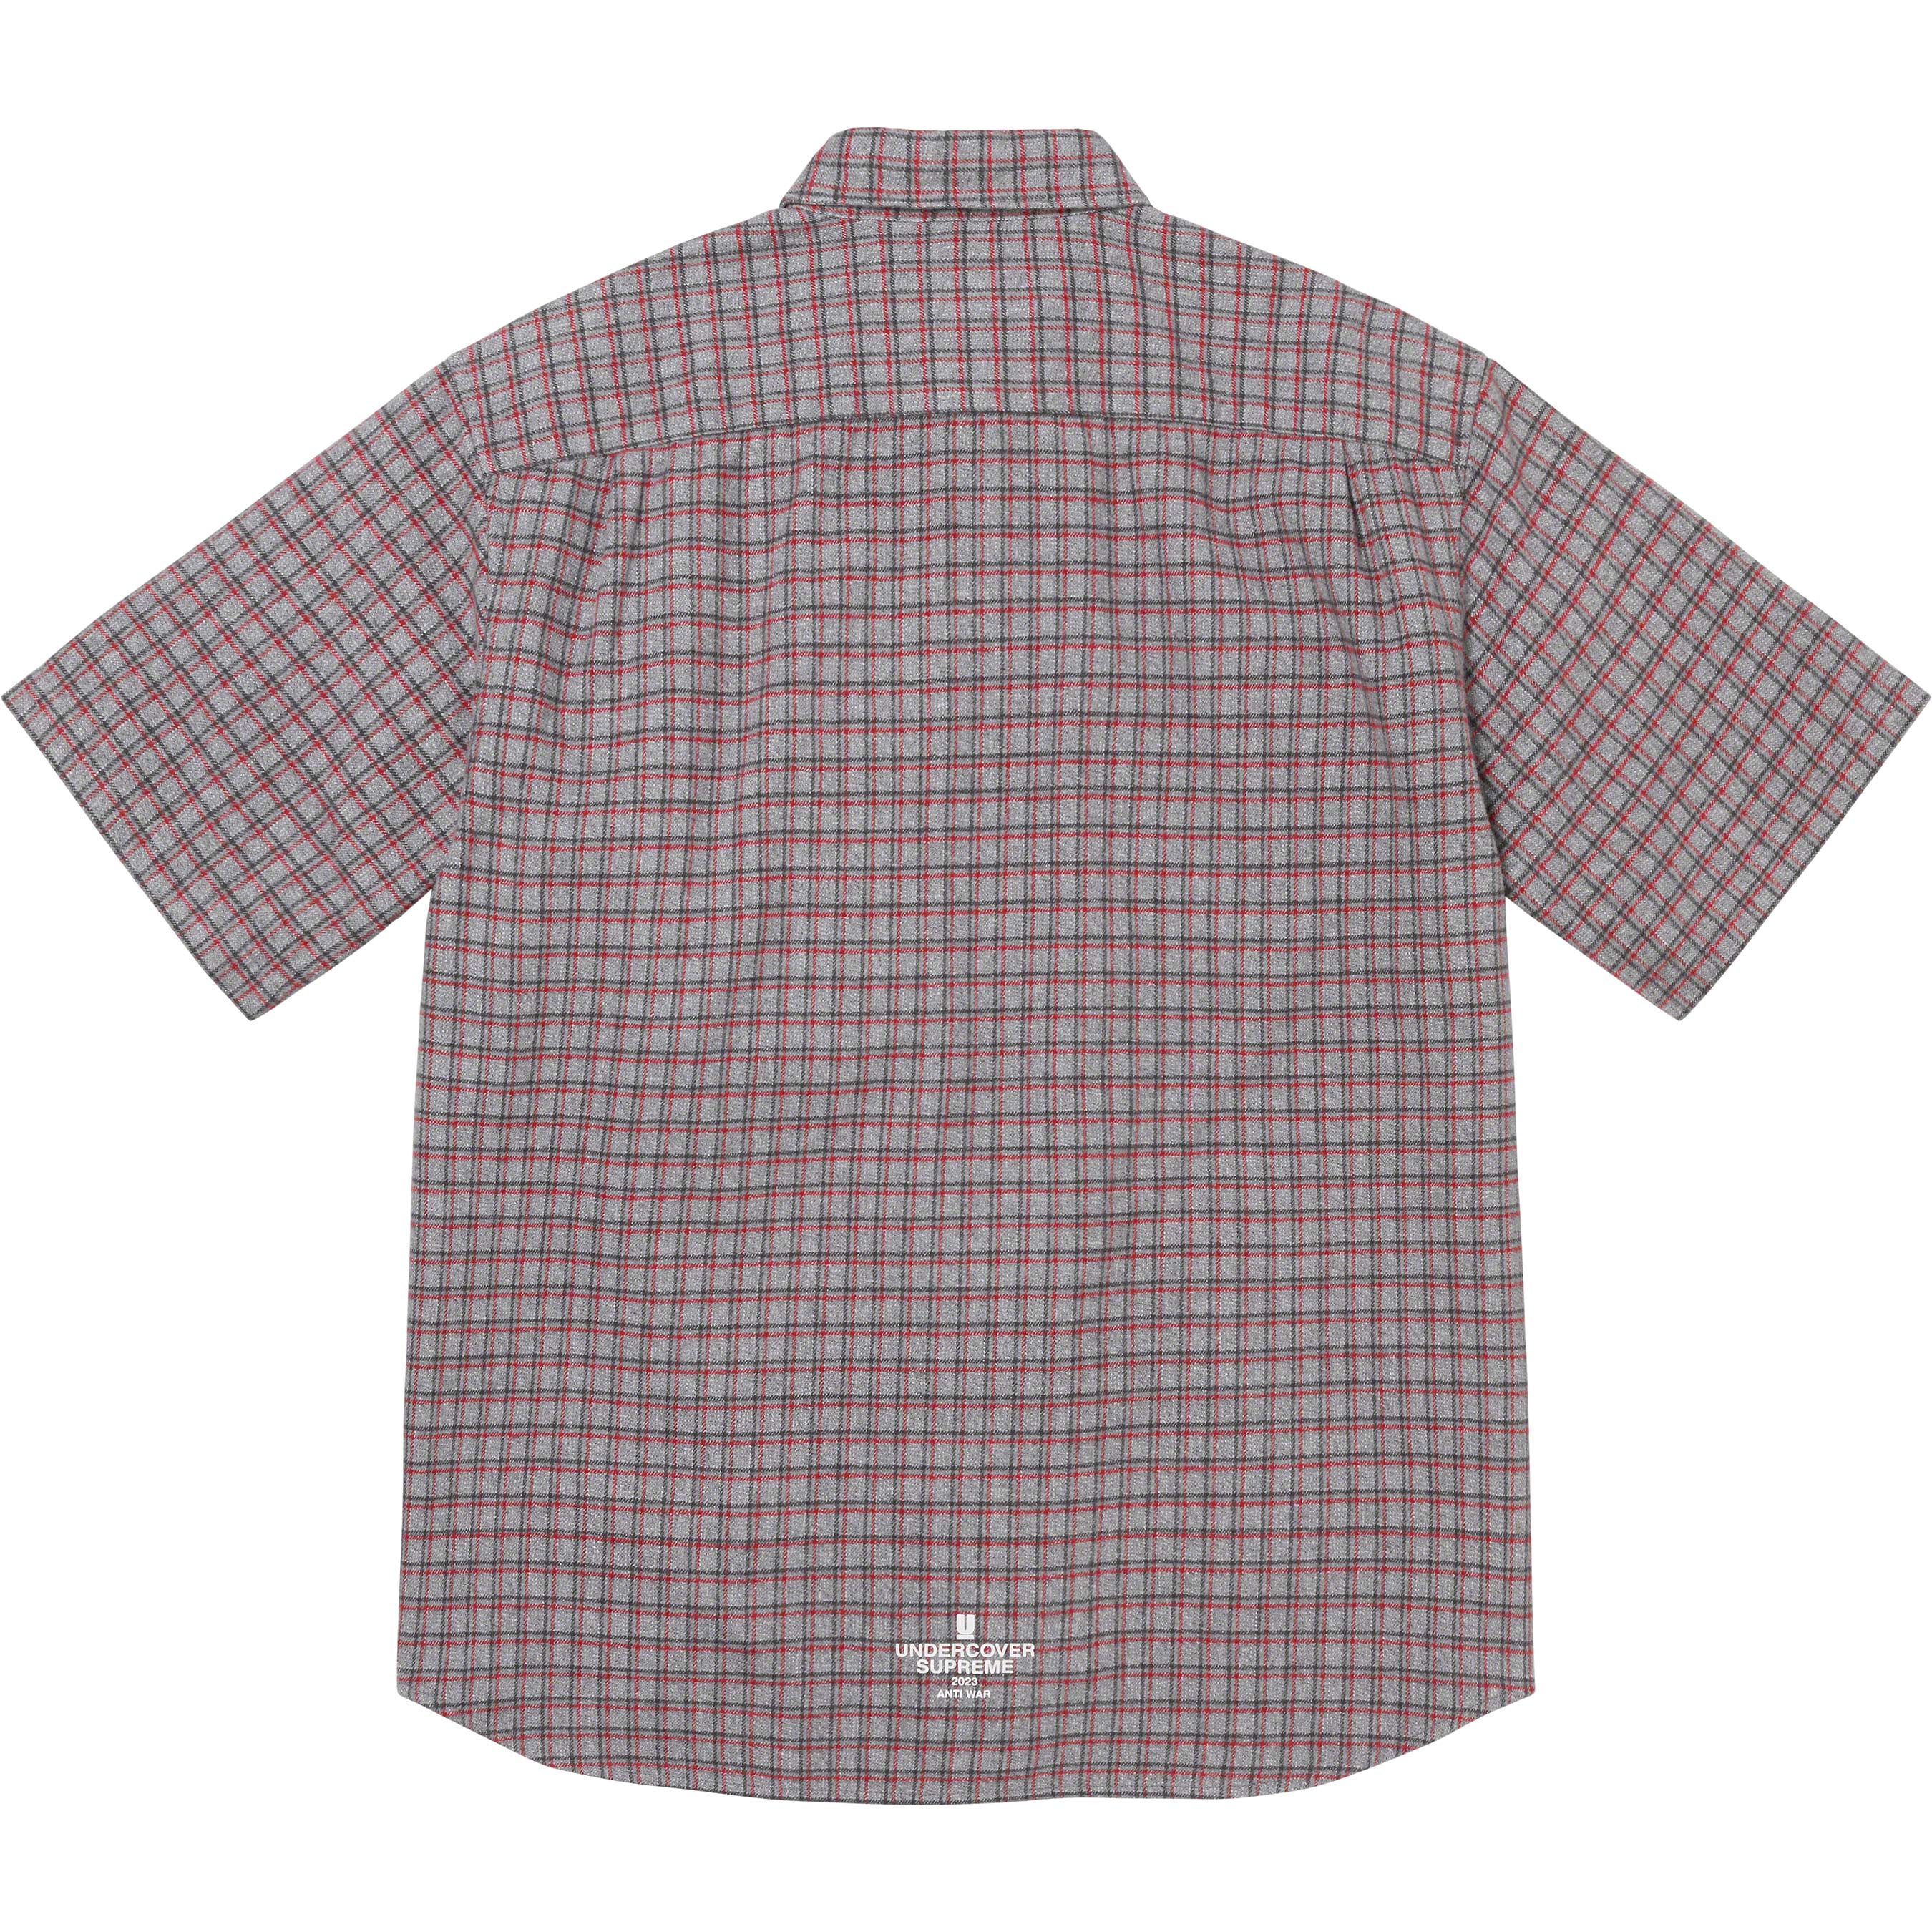 Supreme x Undercover Red Plaid Flannel Shirt - Farfetch